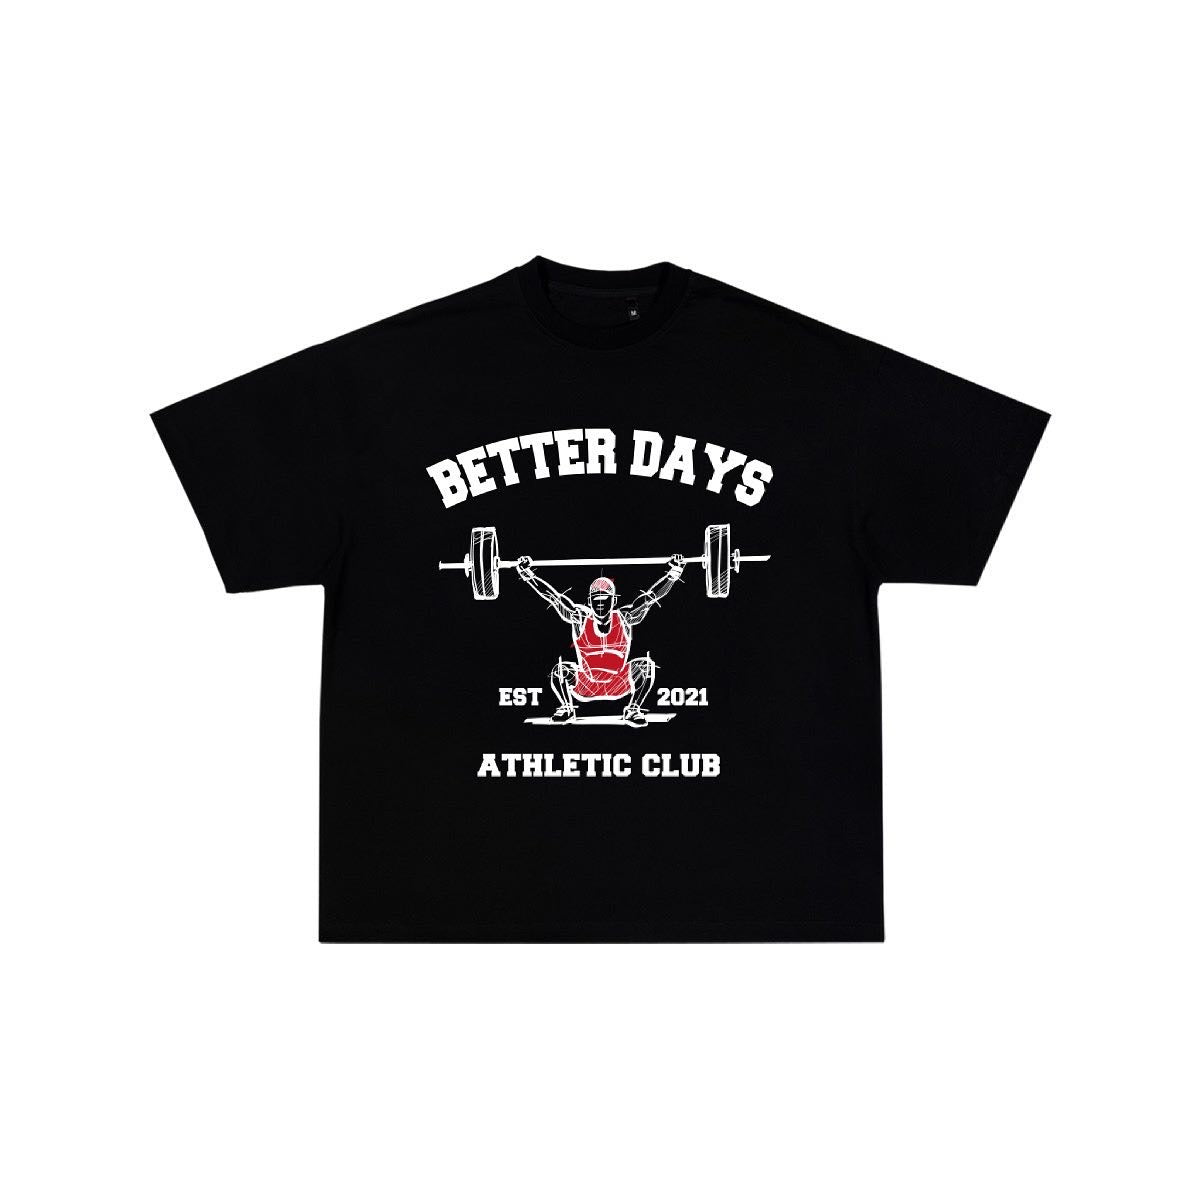 Black Athletic club oversized T shirt